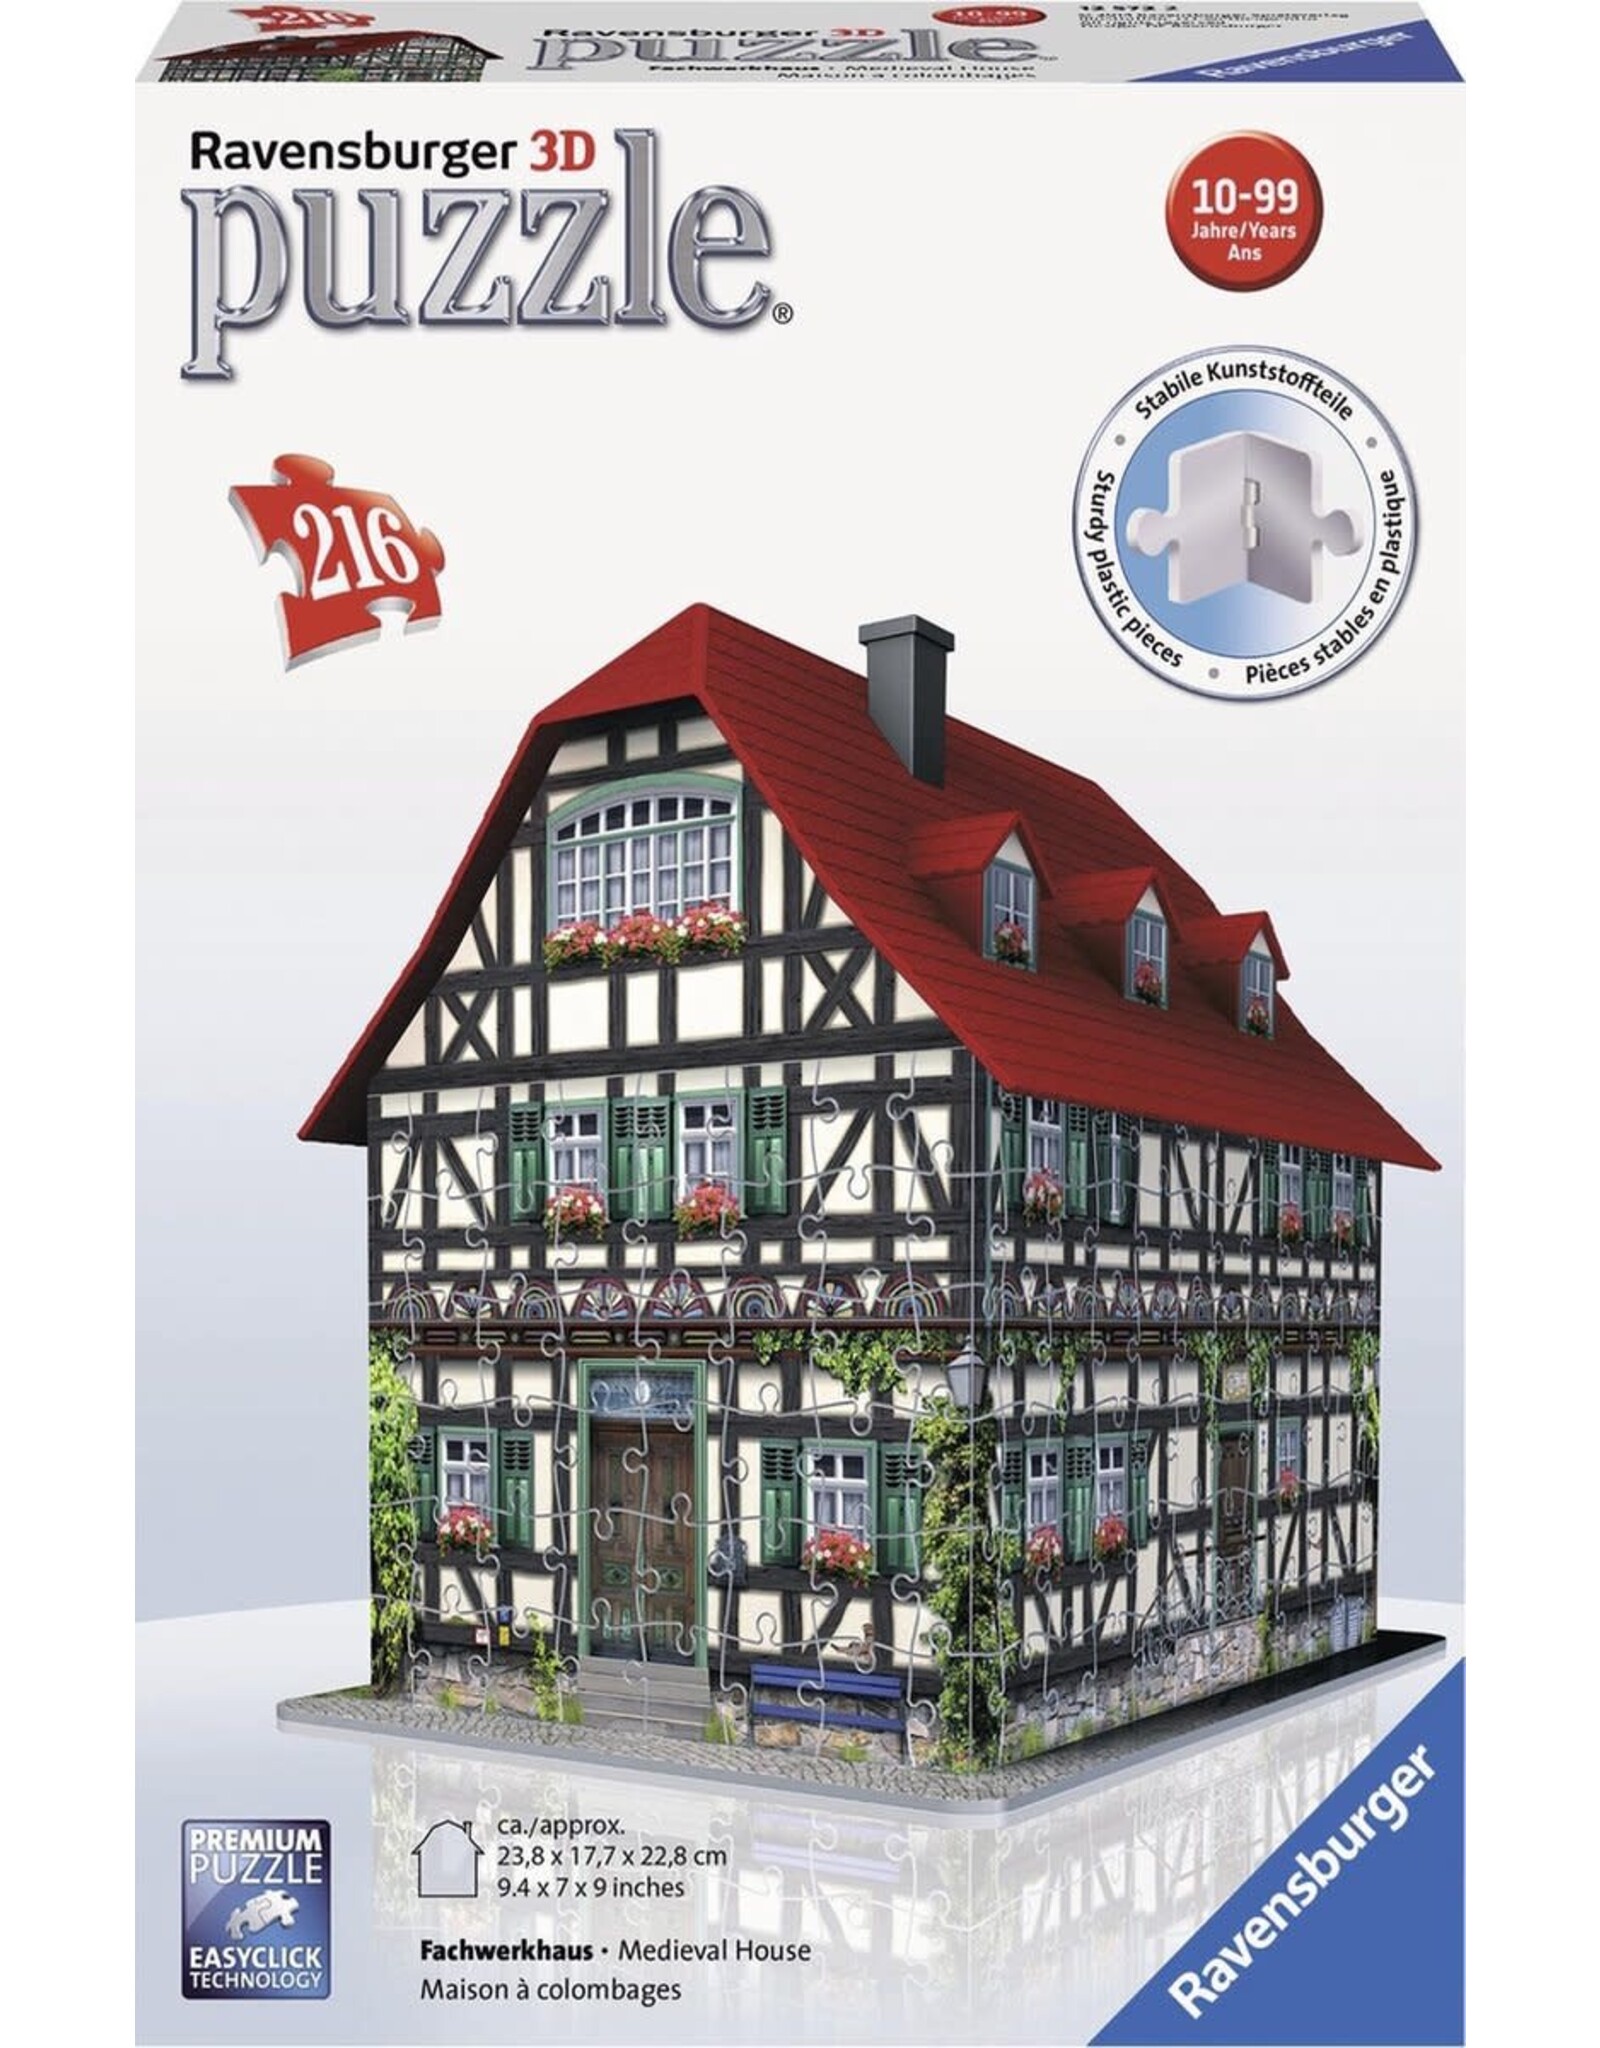 Ravensburger Ravensburger 3D Puzzel 125722 Middeleeuws Huis - 216 Stukjes